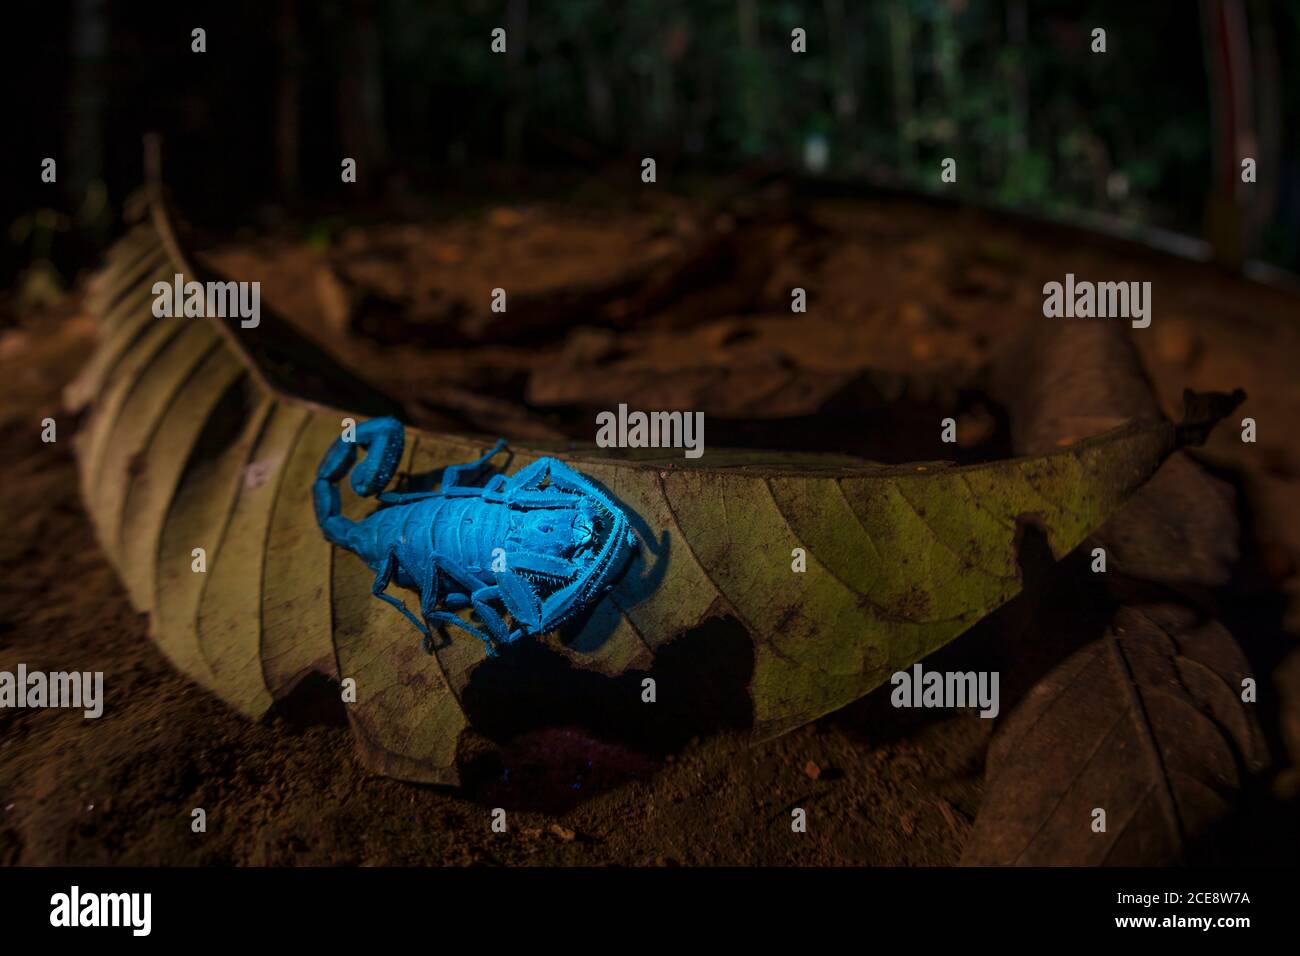 Closeup of bright blue scorpion Centruroides gracilissitting glowing under UV light sitting on dry tree leaf Stock Photo